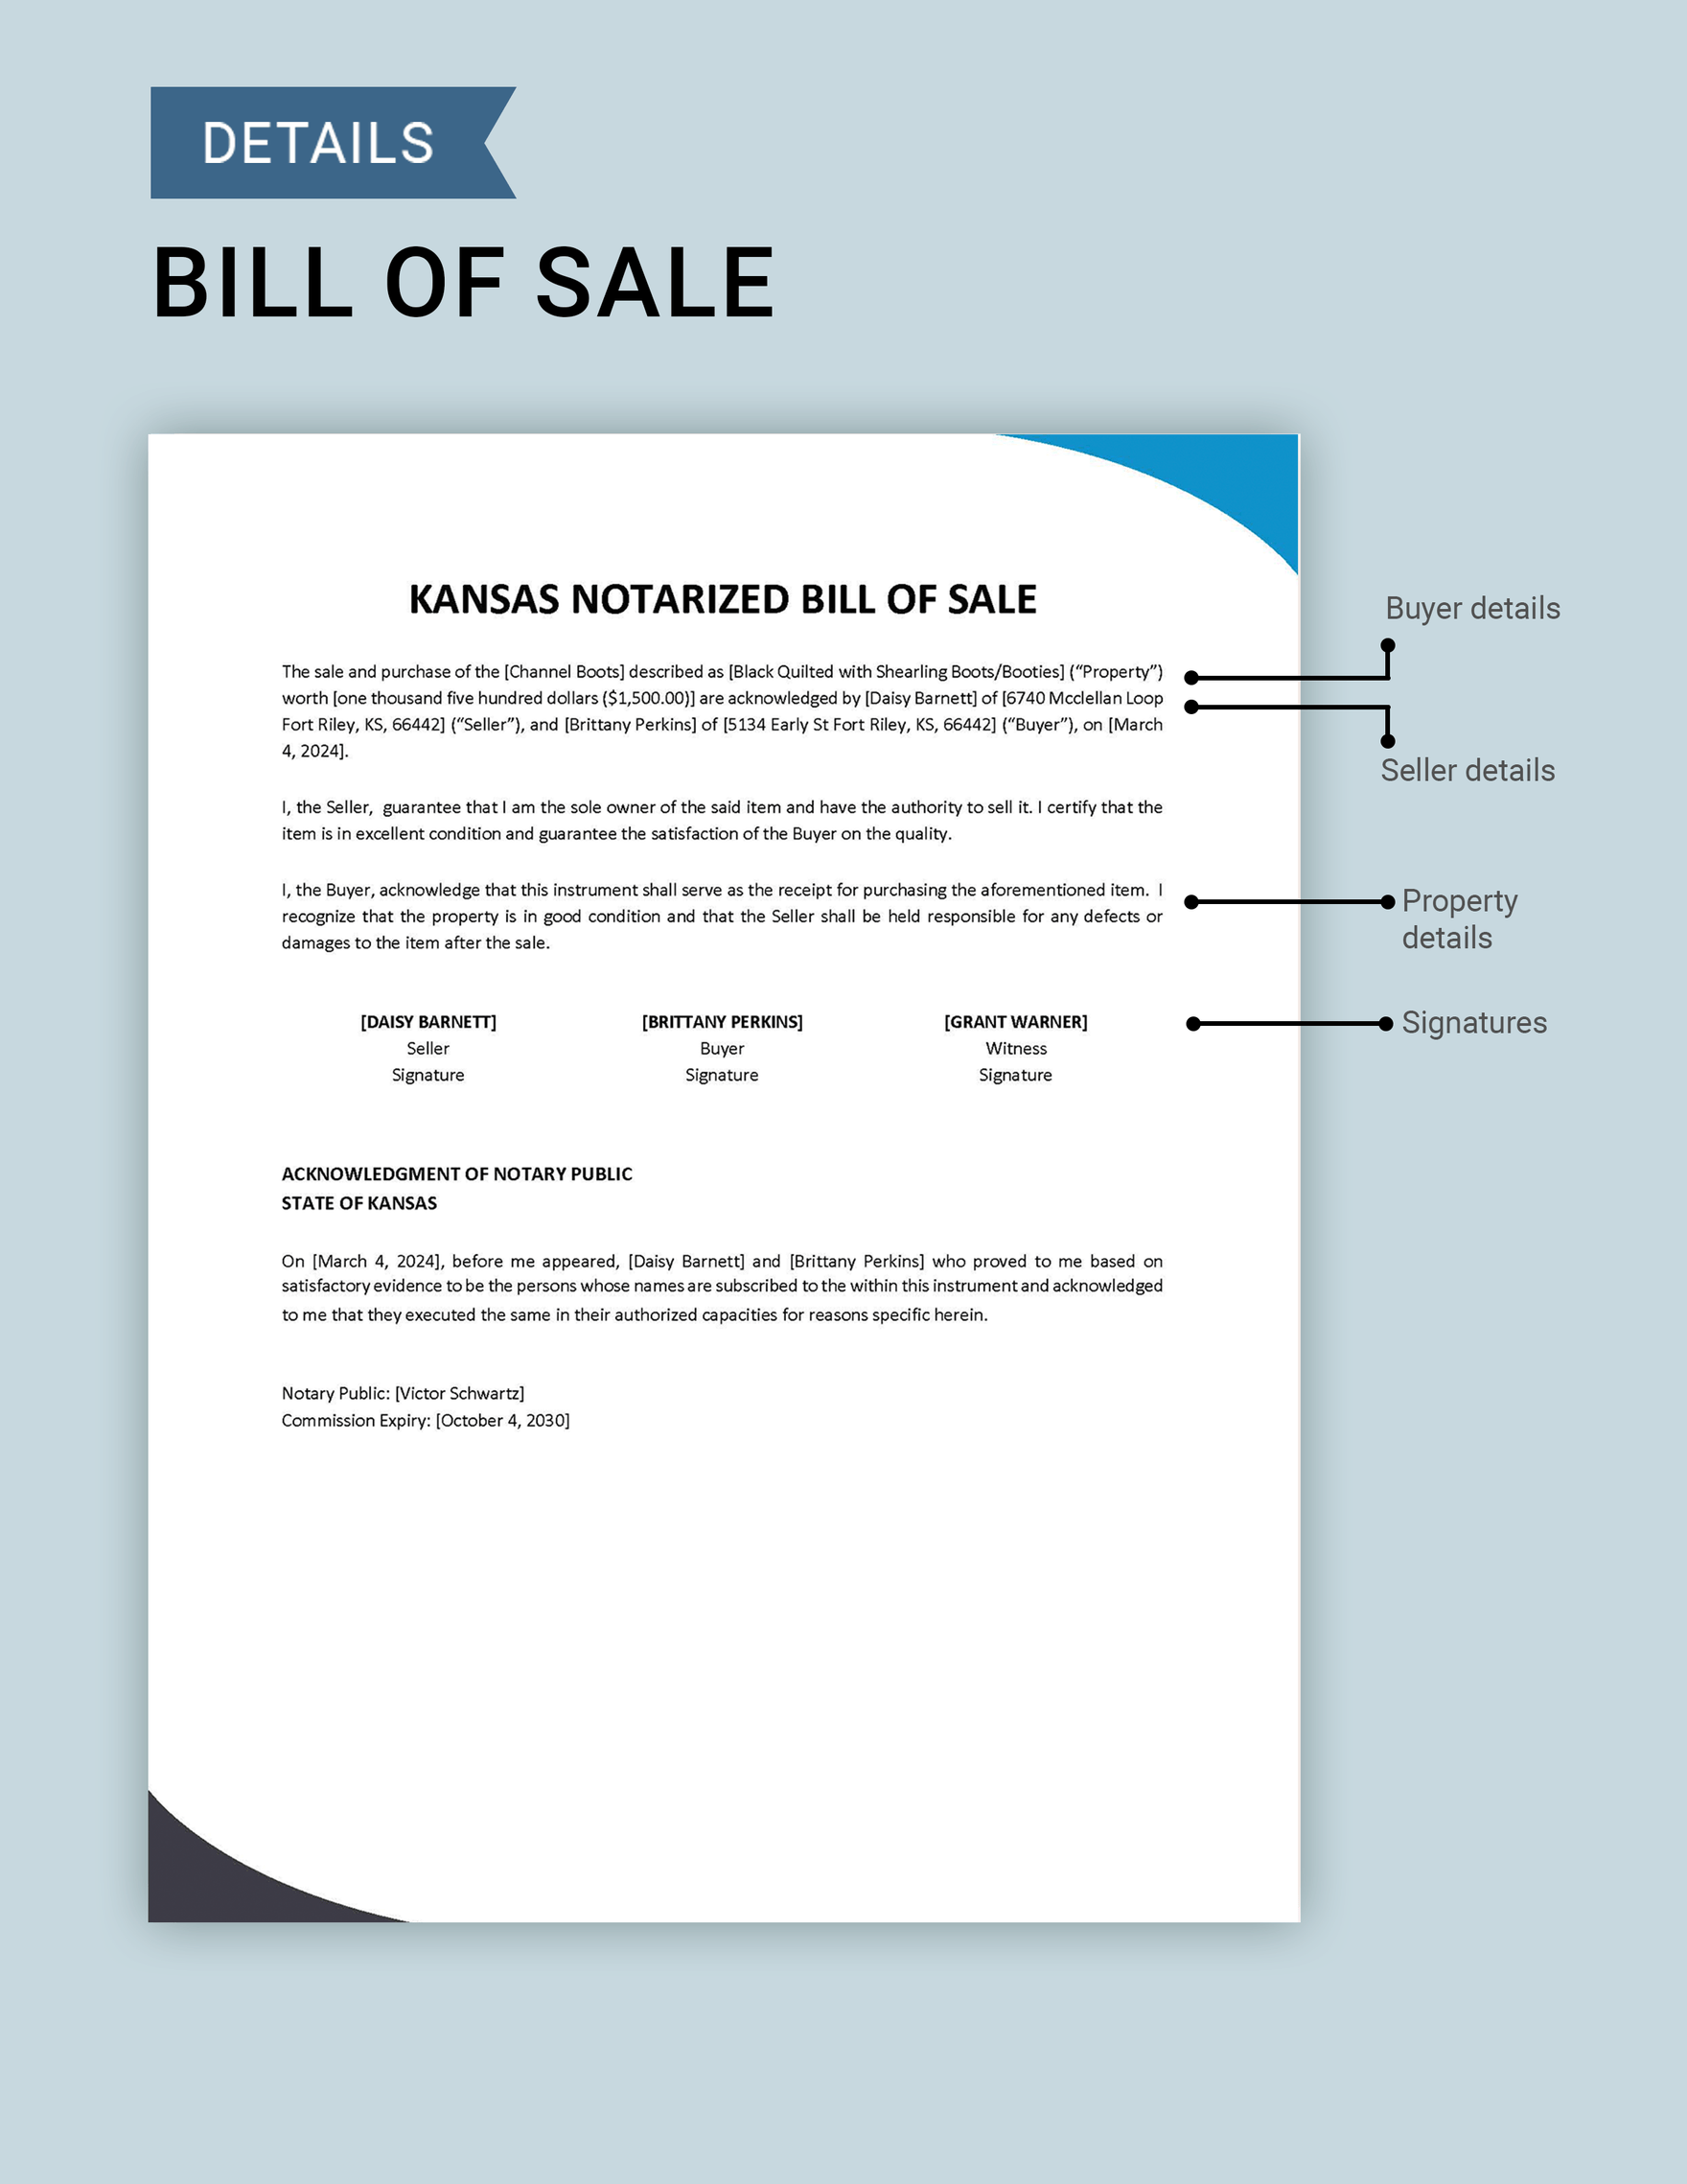 Kansas Notarized Bill of Sale Template